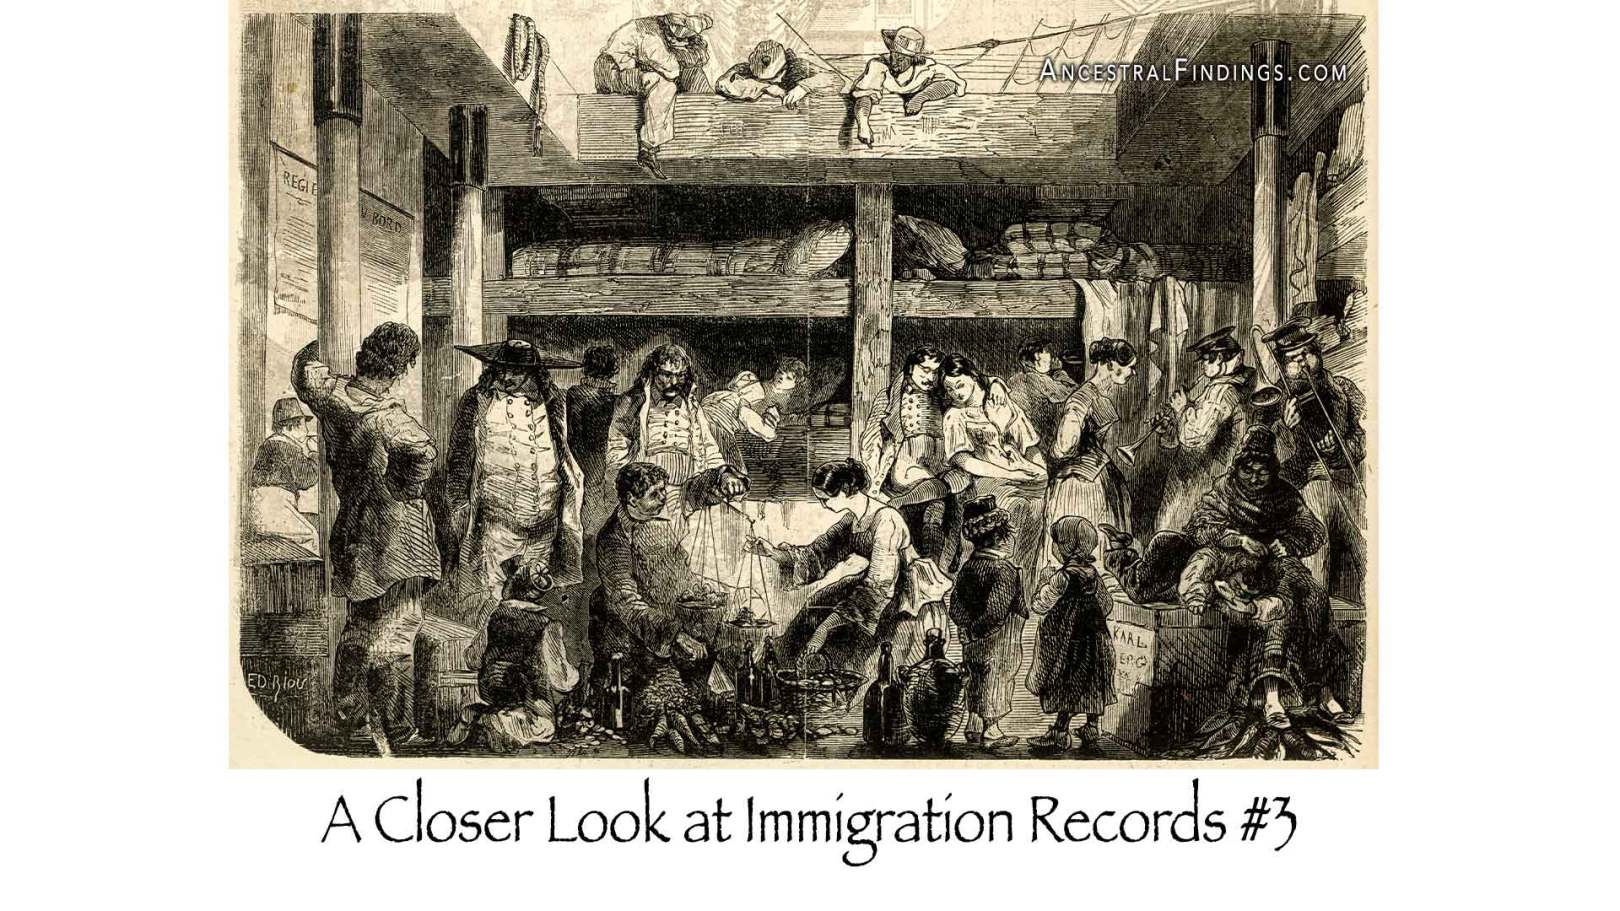 A Closer Look at Immigration Records #3